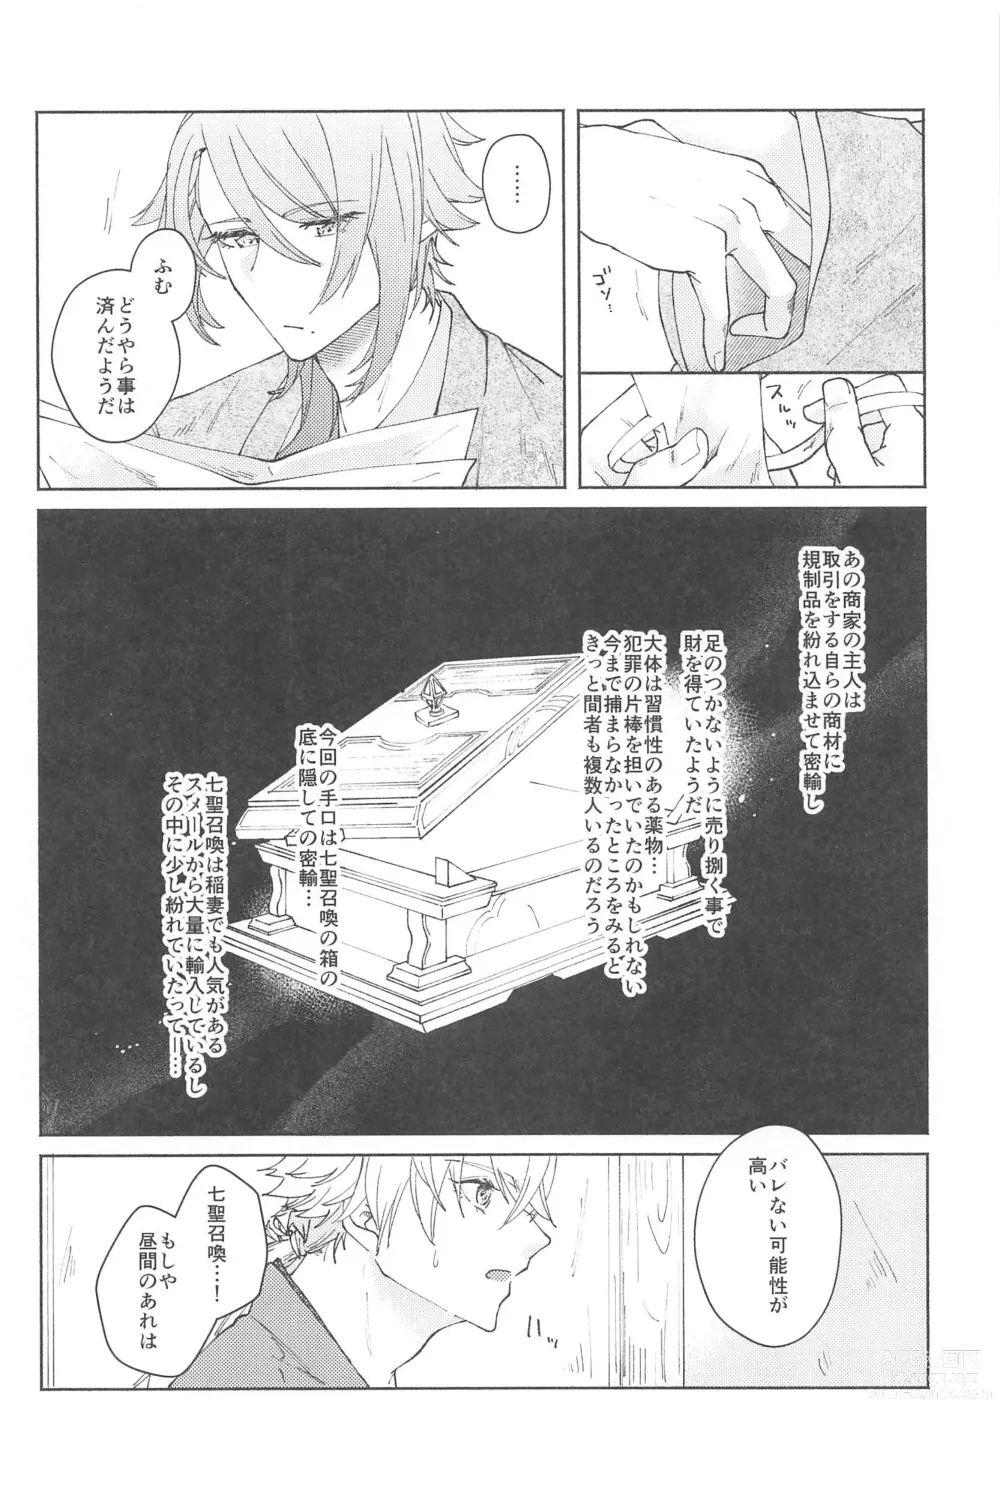 Page 21 of doujinshi Zenbu Kimi no Mono